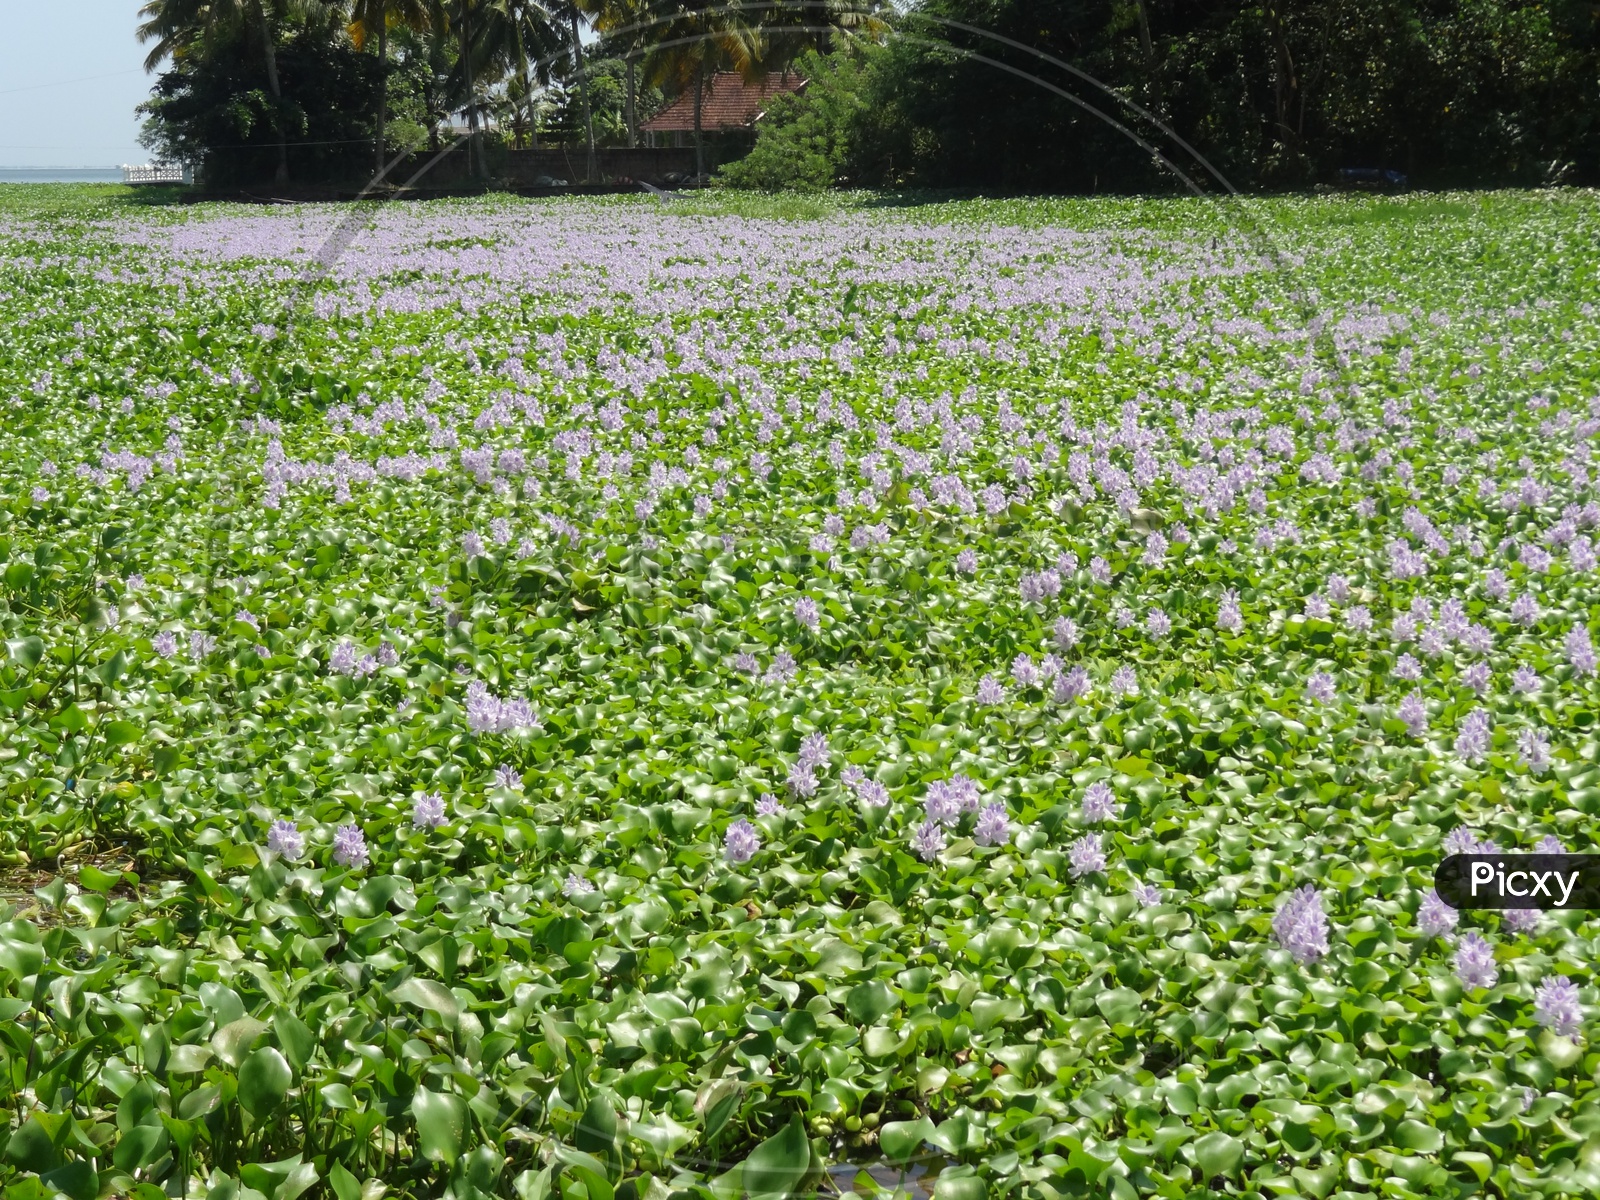 Hyacinth aquatic plants in full bloom in Kerala backwaters